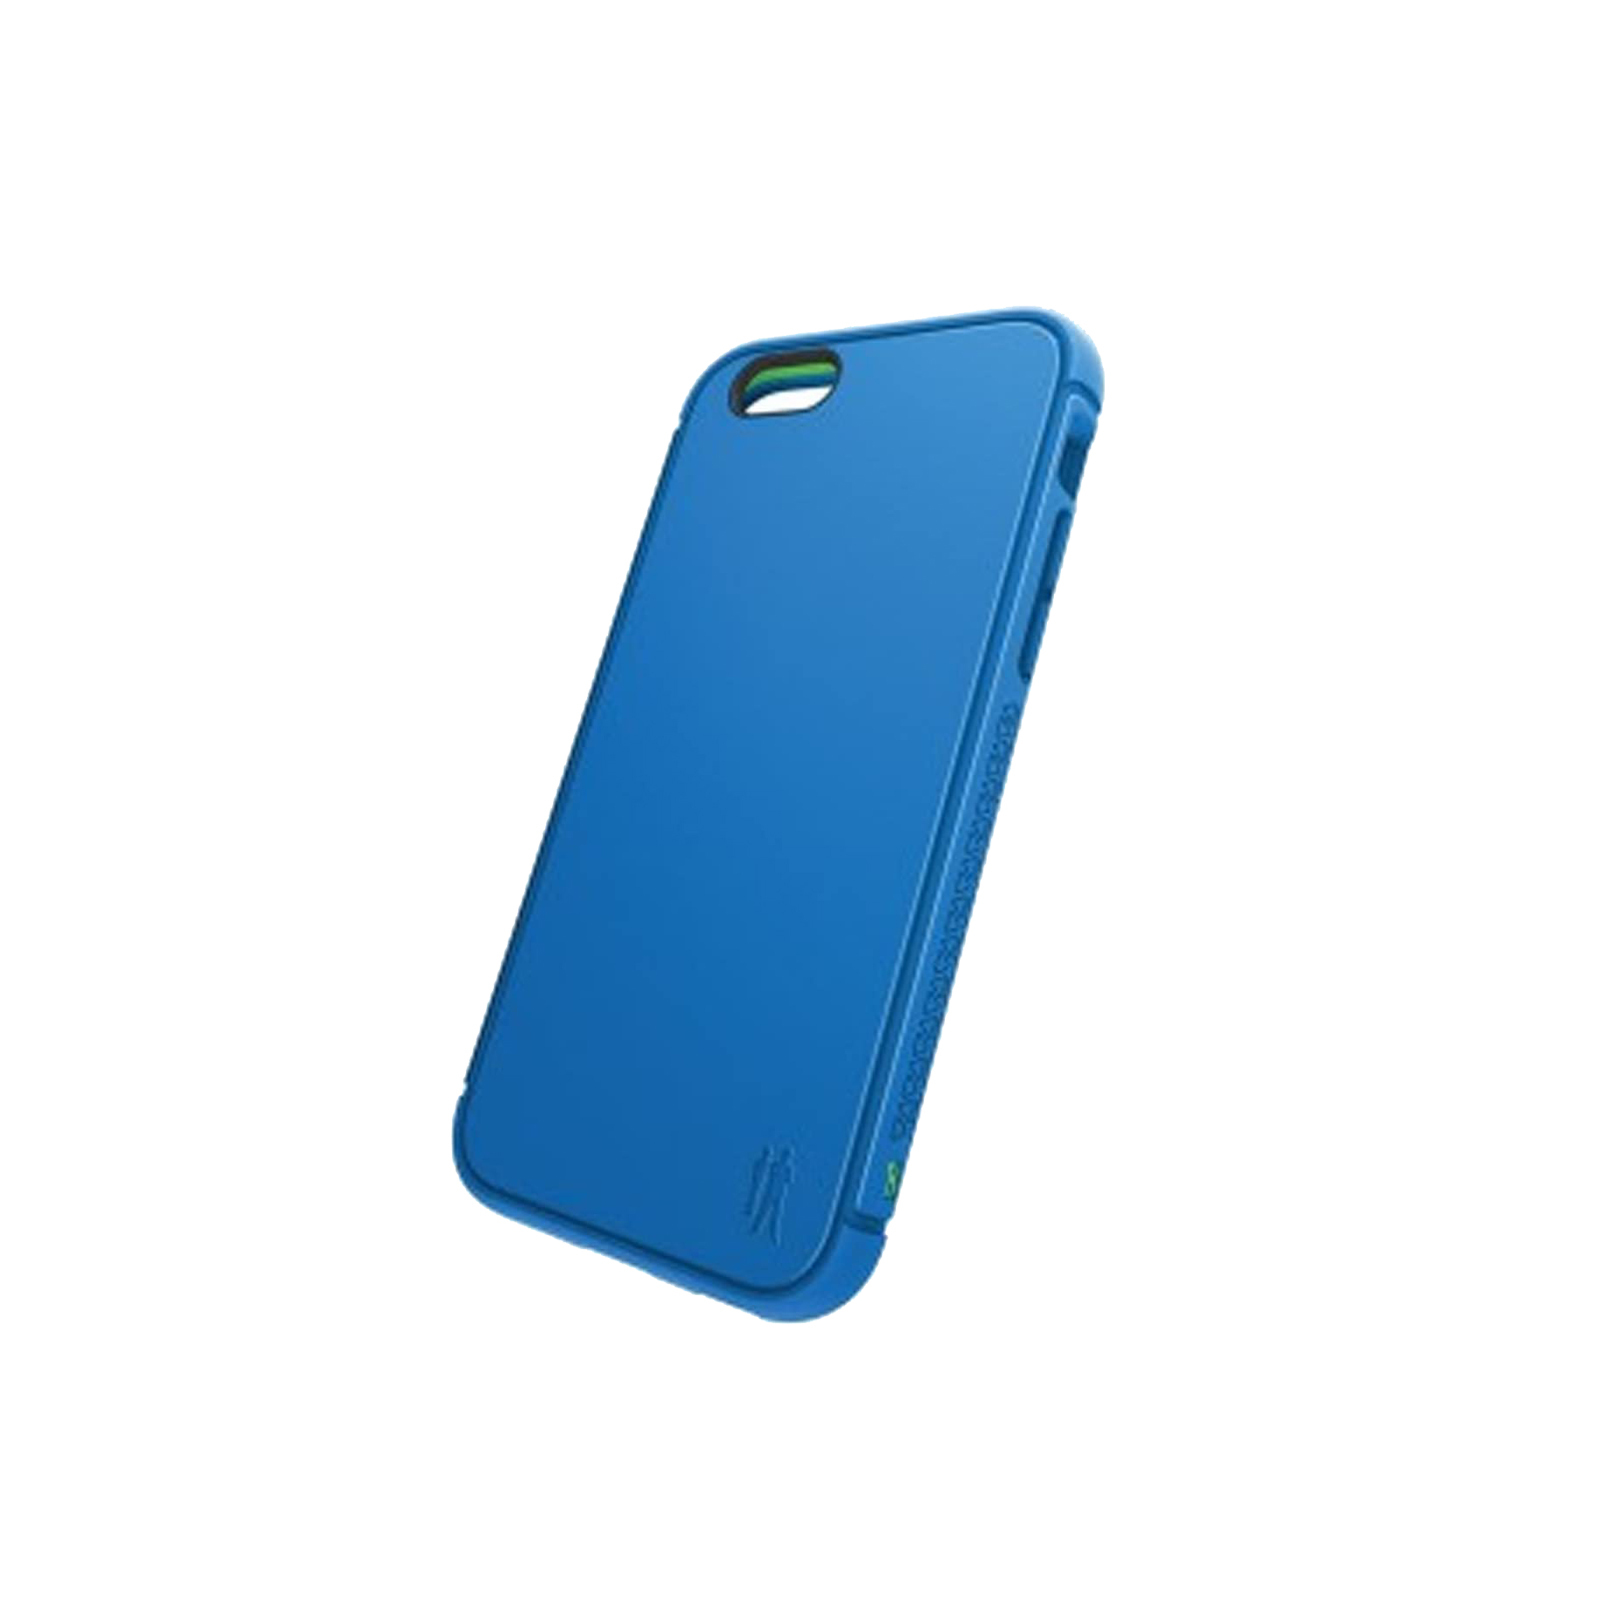 BodyGuardz Shock iPhone 7 Plus Blue Case - Brand New